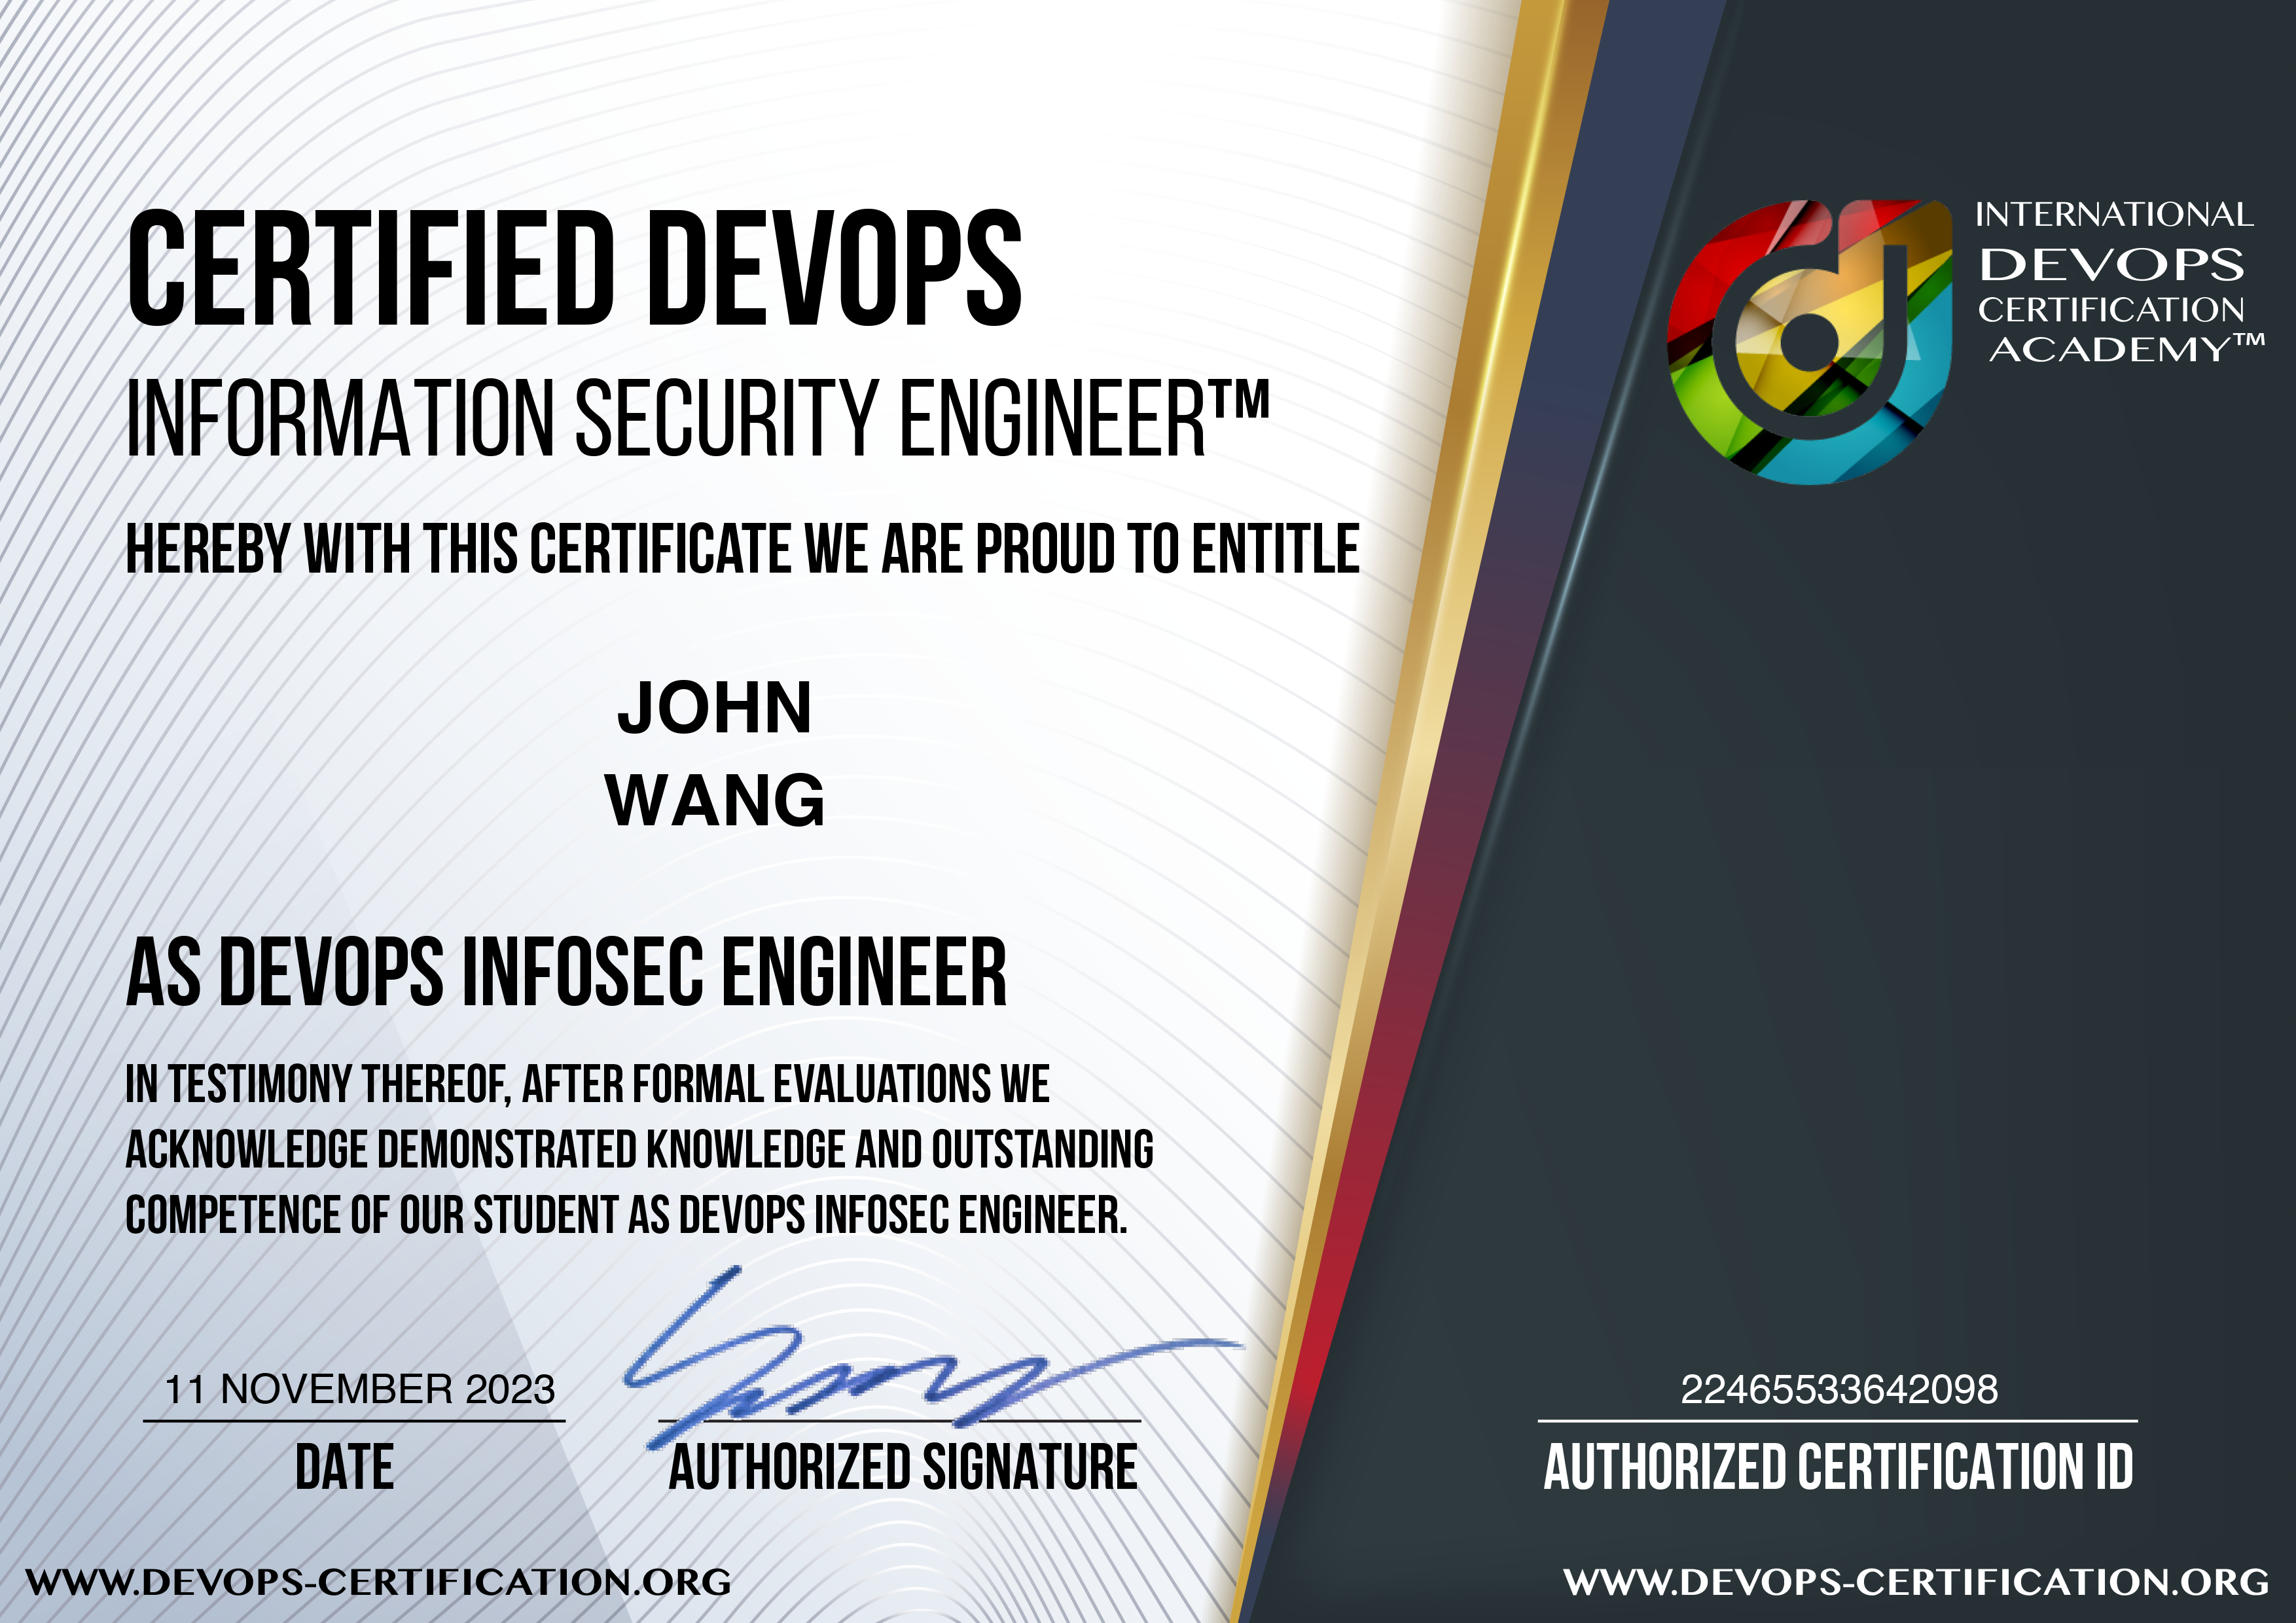 John's Certified DevOps Information Security Engineer (DevOps-SEC) from DevOps Academy